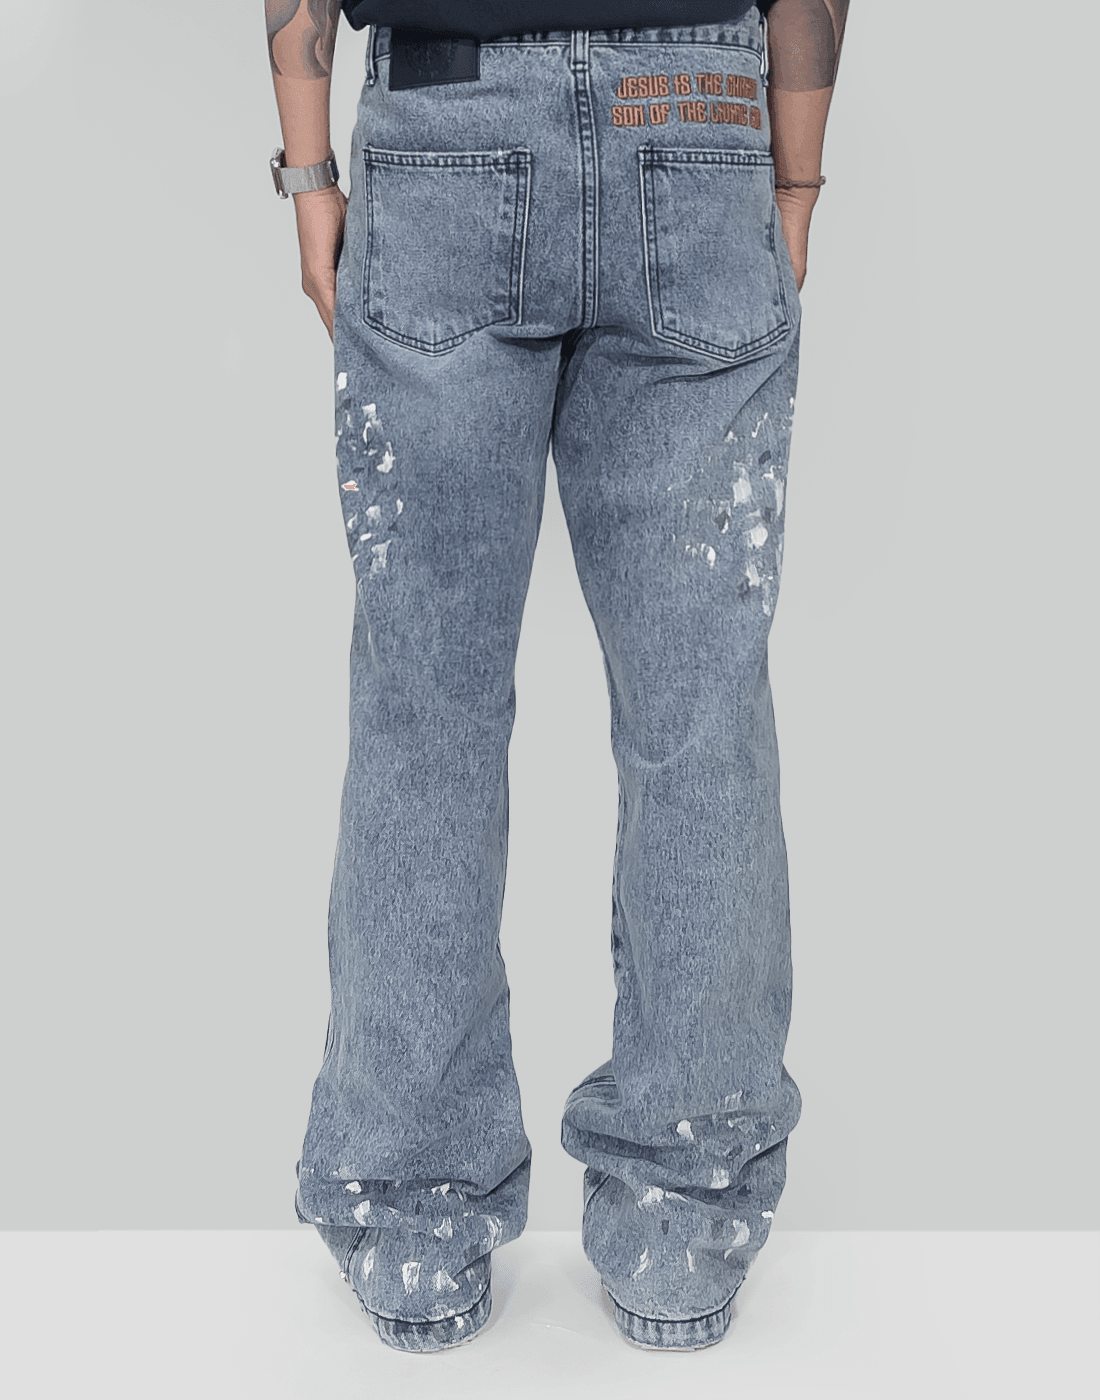 SOMEIT S.O.G Vintage Denim Pants – 082plus